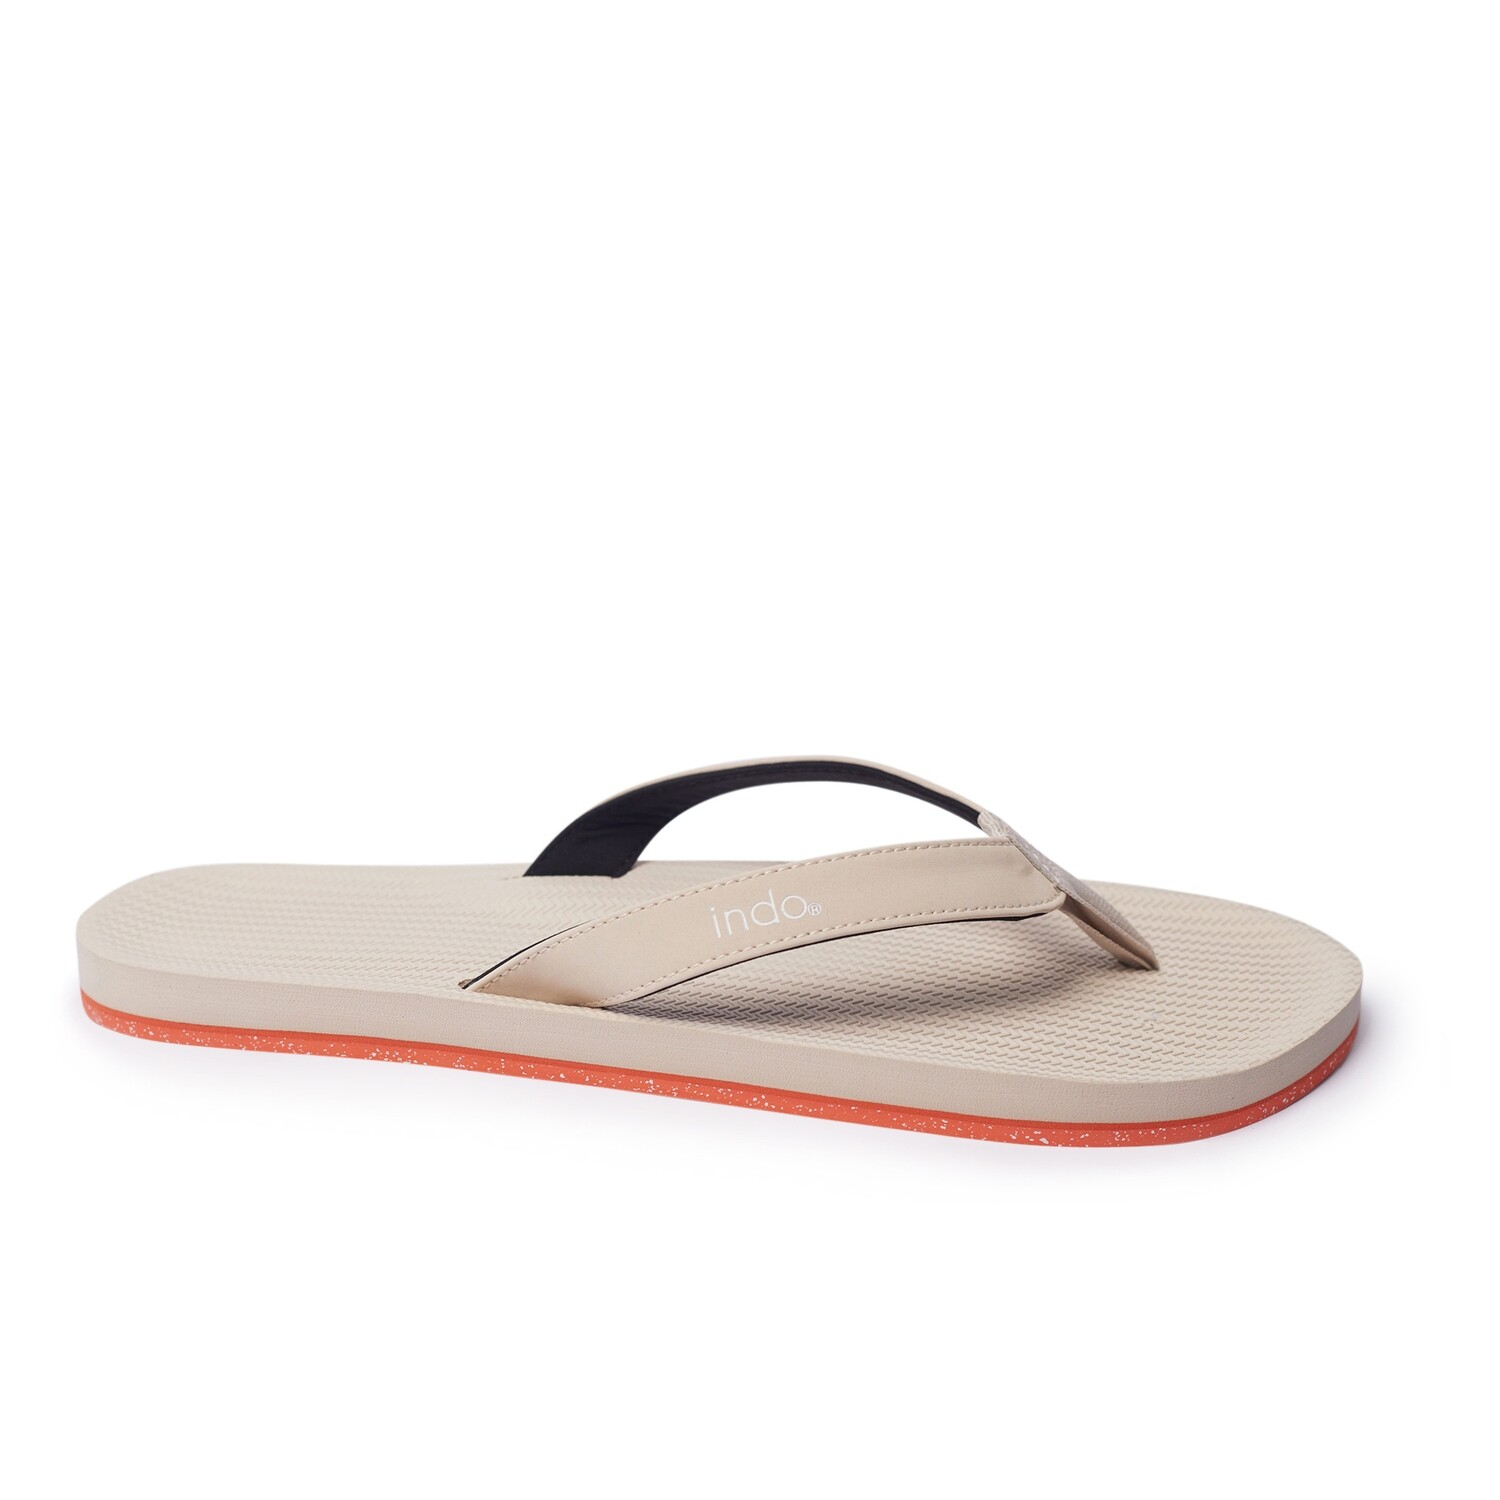 Mens Indosole - Flip Flops Sneaker Sole - Sea Salt with Orange Sole